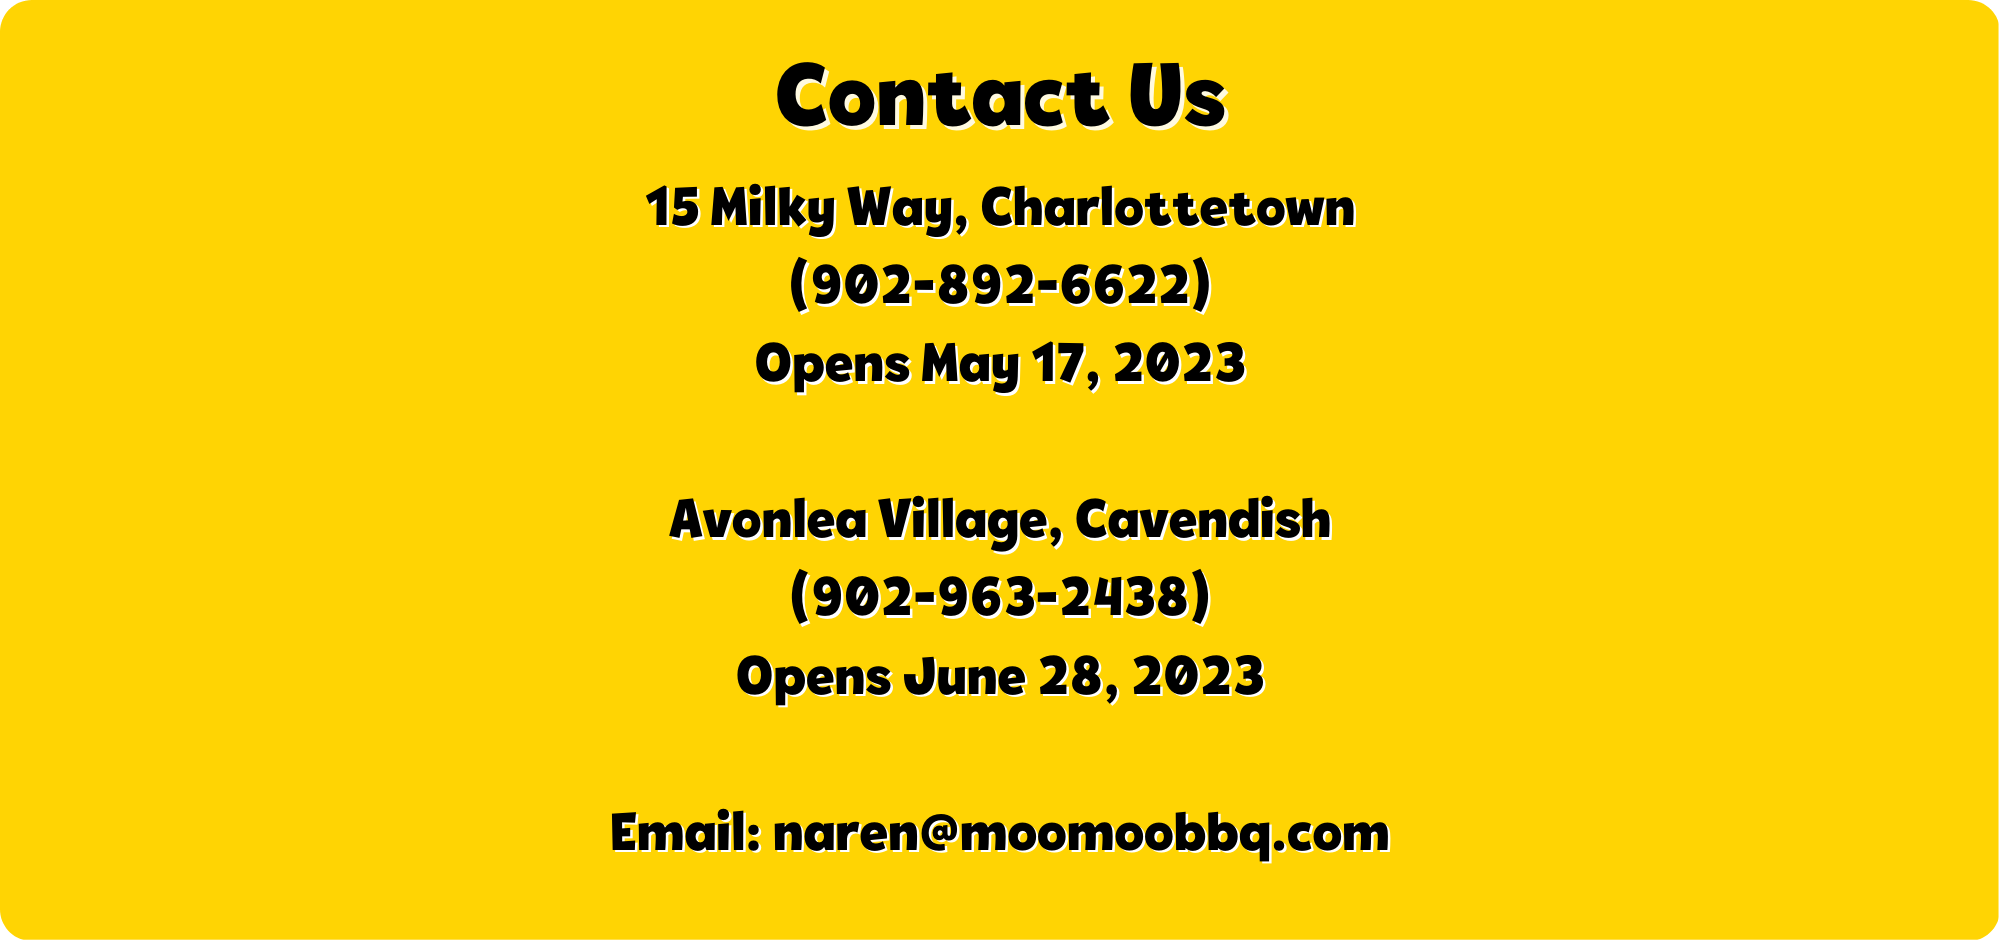 Contact Us - 15 Milky Way, Charlottetown. 902-892-6622. Opens May 17 2023. Avonlea Village Cavendish. 902-963-2438. Opens June 28, 2023. Email naren@moomoobbq.com